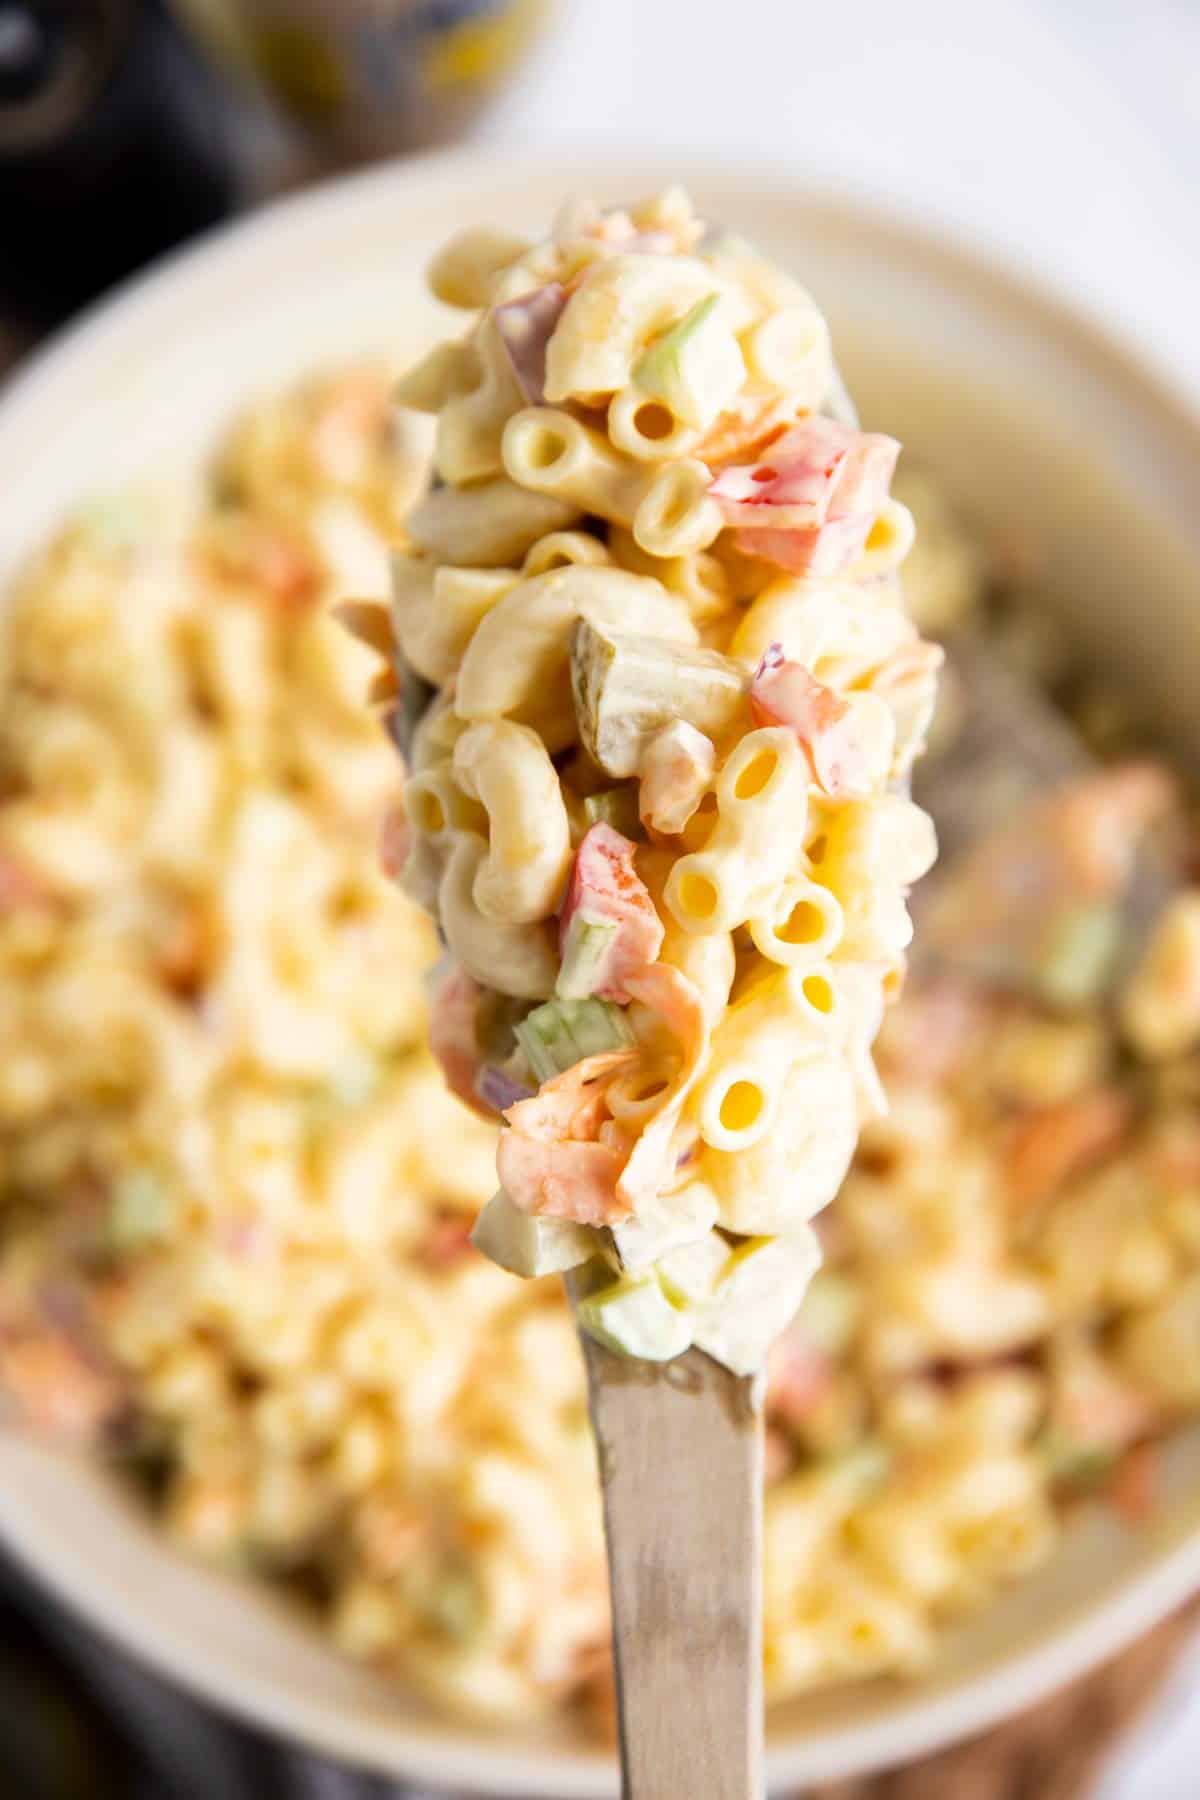 spoon with macaroni salad on top